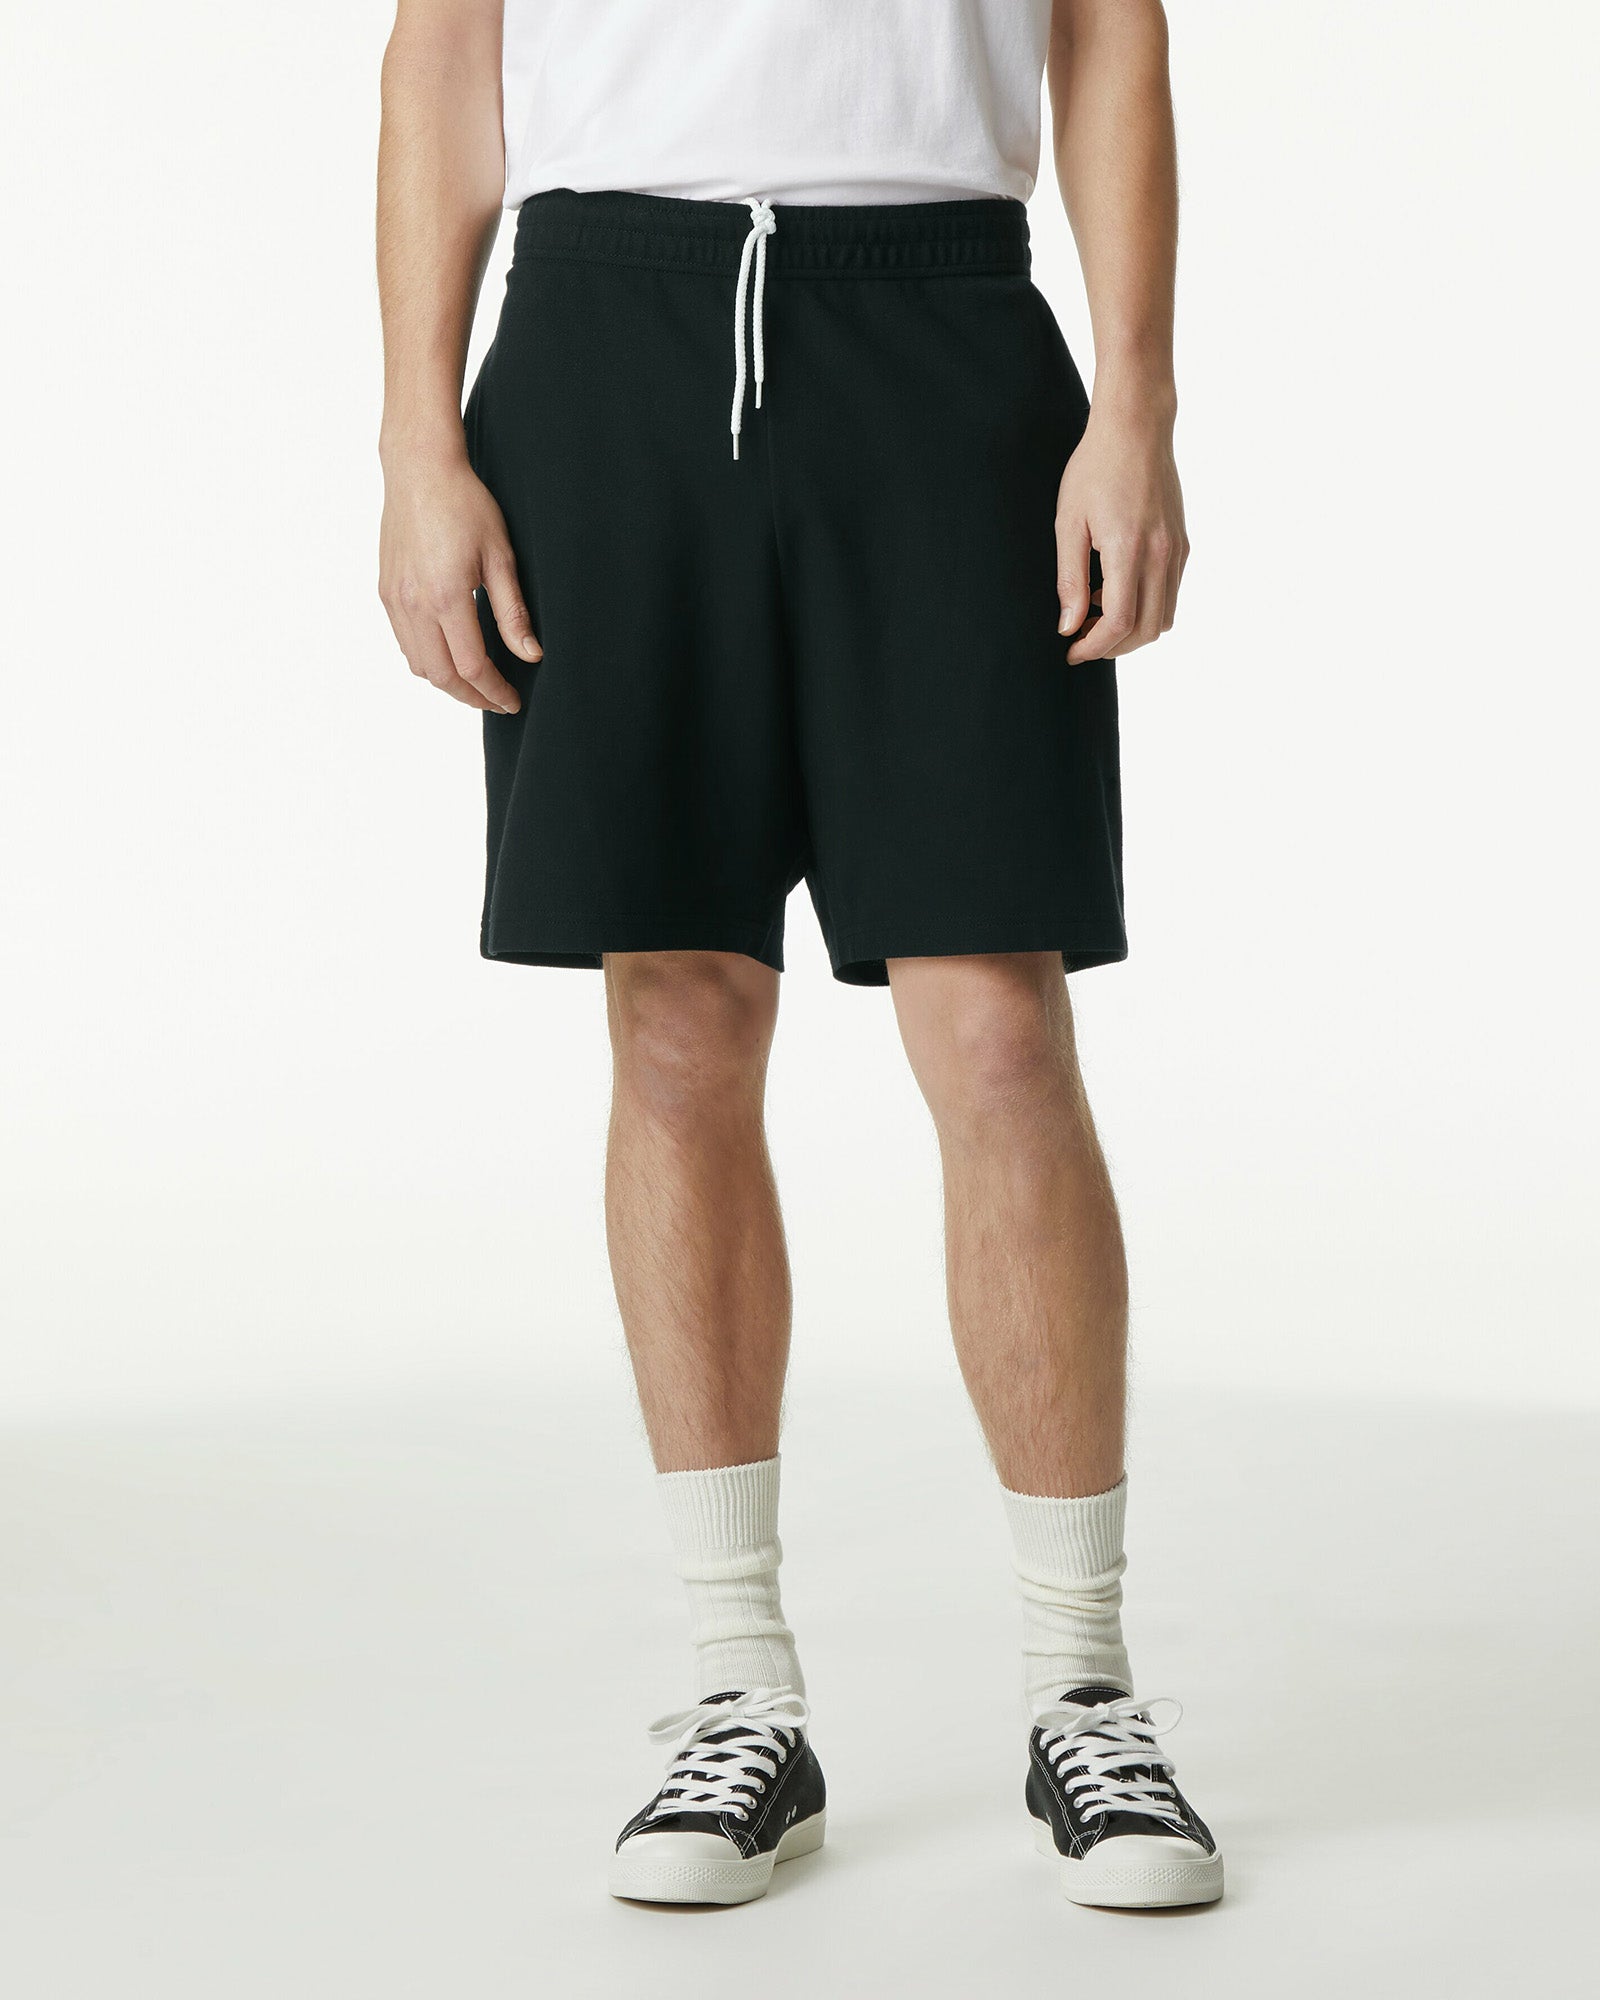 Pique Unisex Gym Shorts - Black